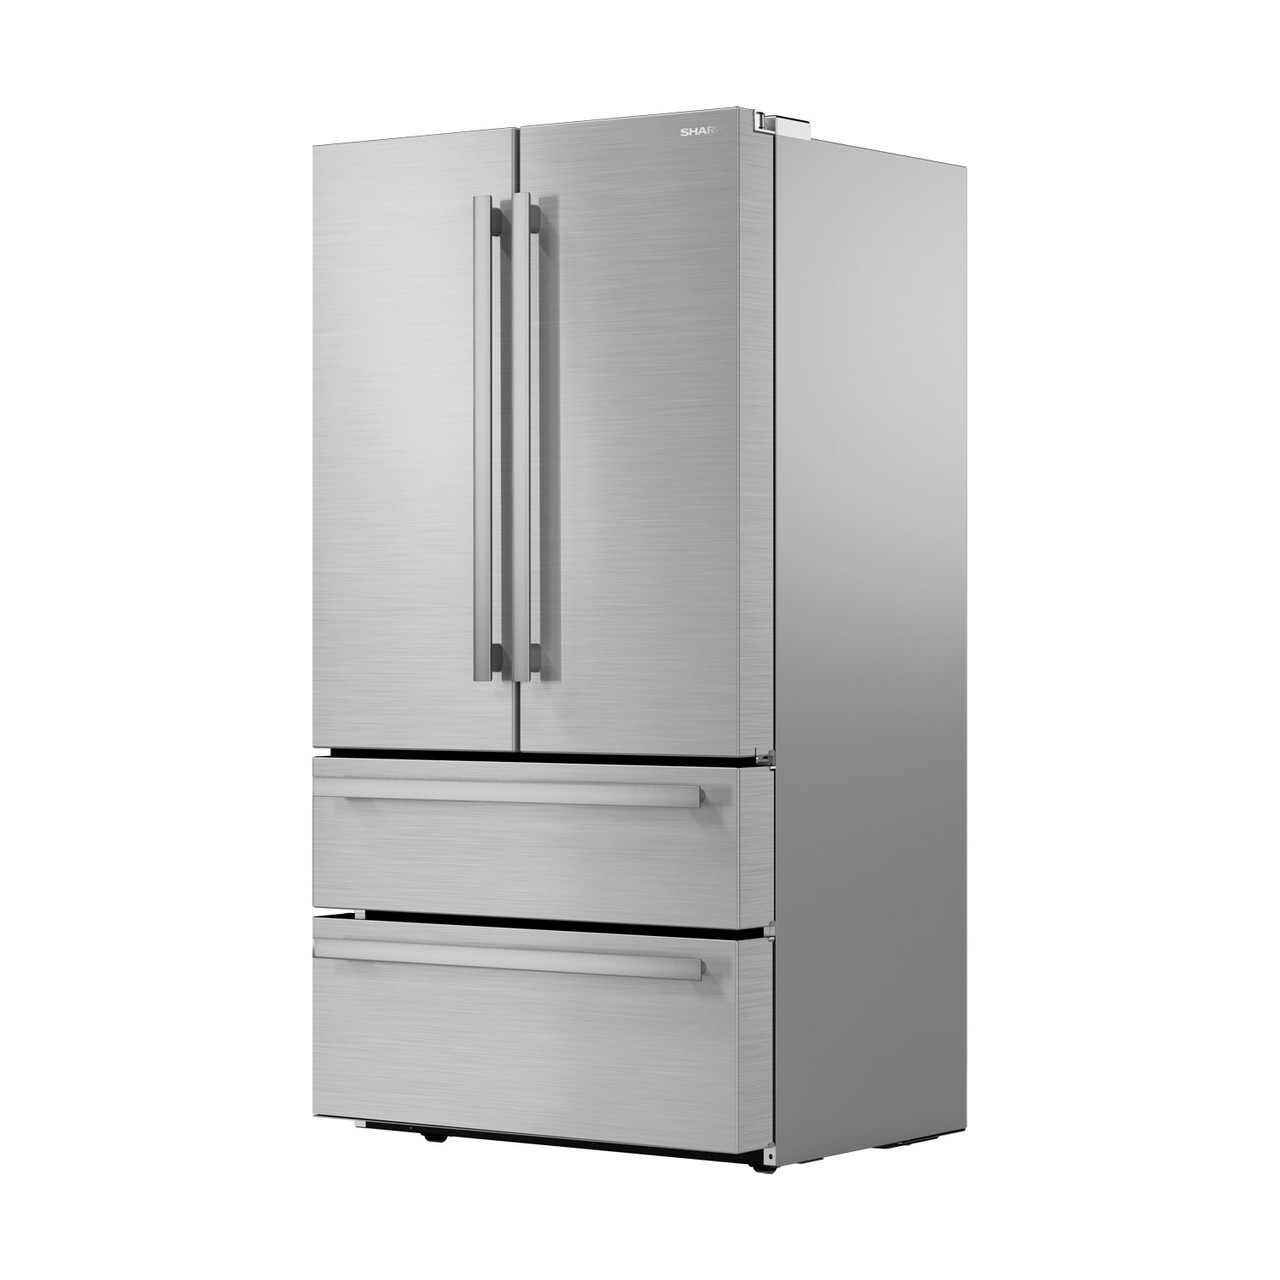 Sharp French 4-Door Counter-Depth Refrigerator (SJG2351FS) – left angle view